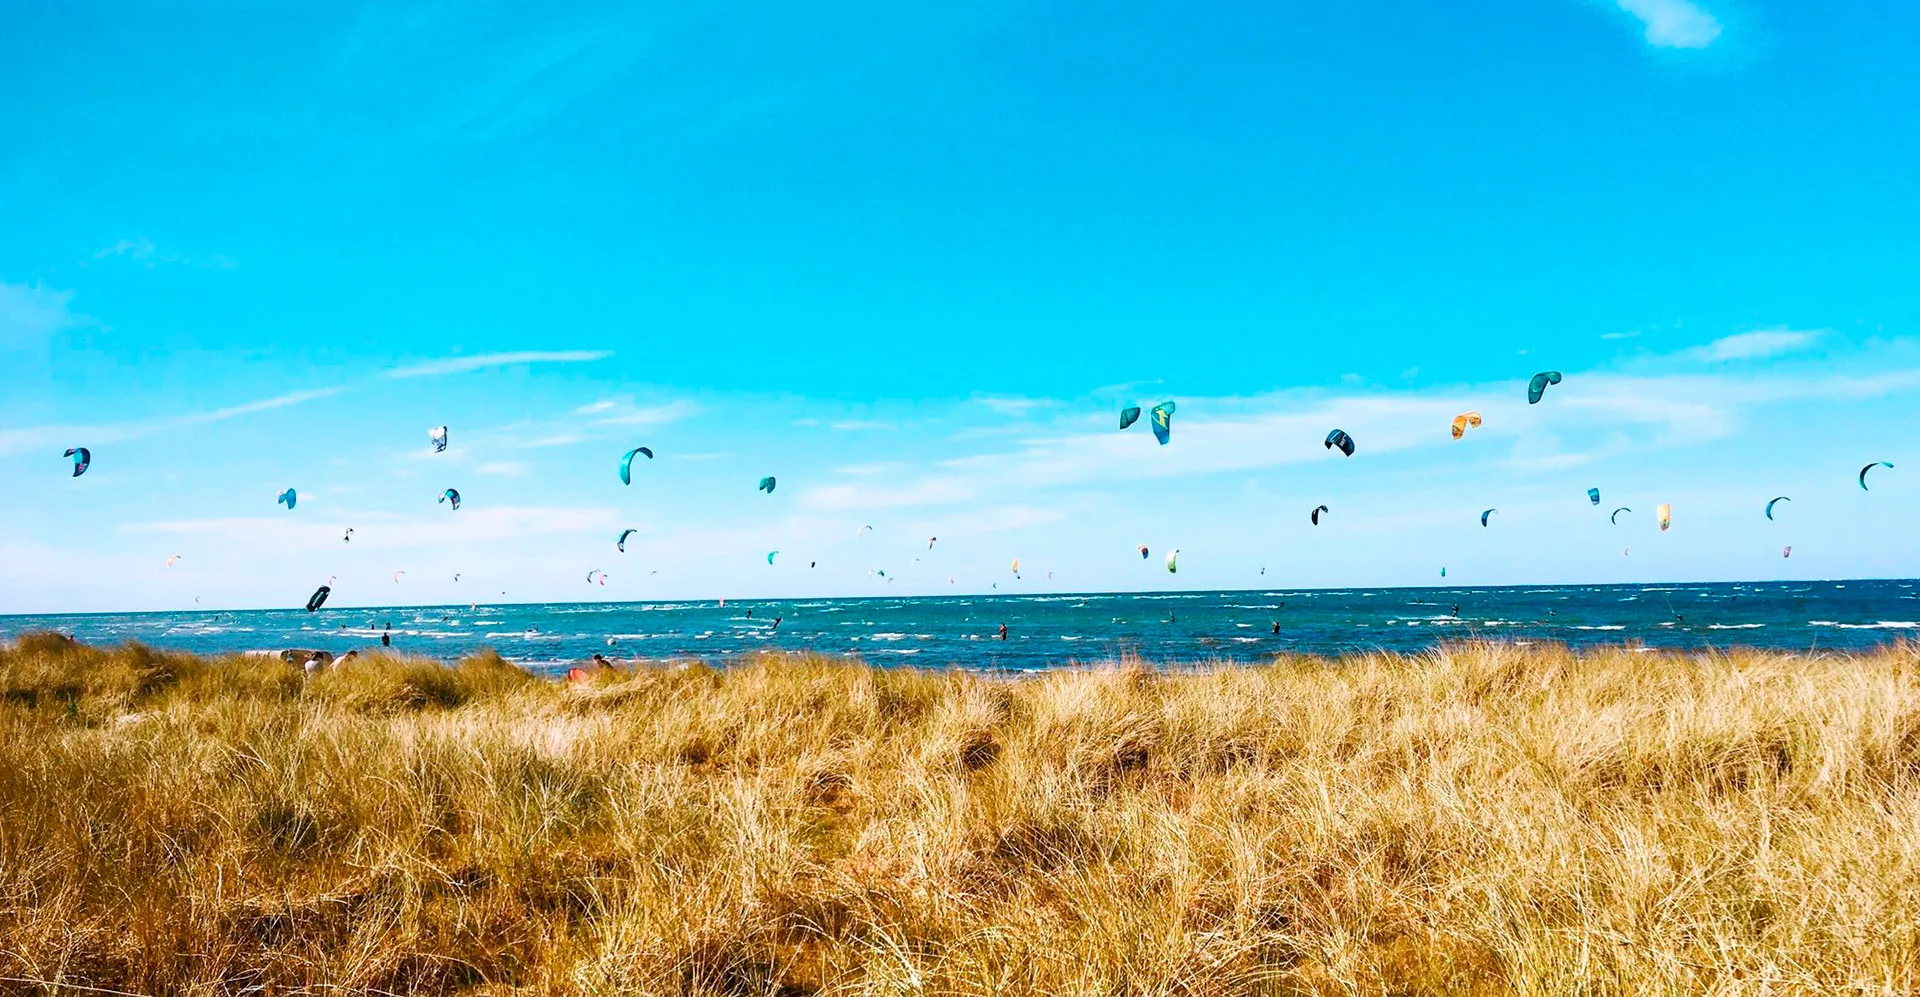 Eco Kitesurfing: A Wind Powered Movement